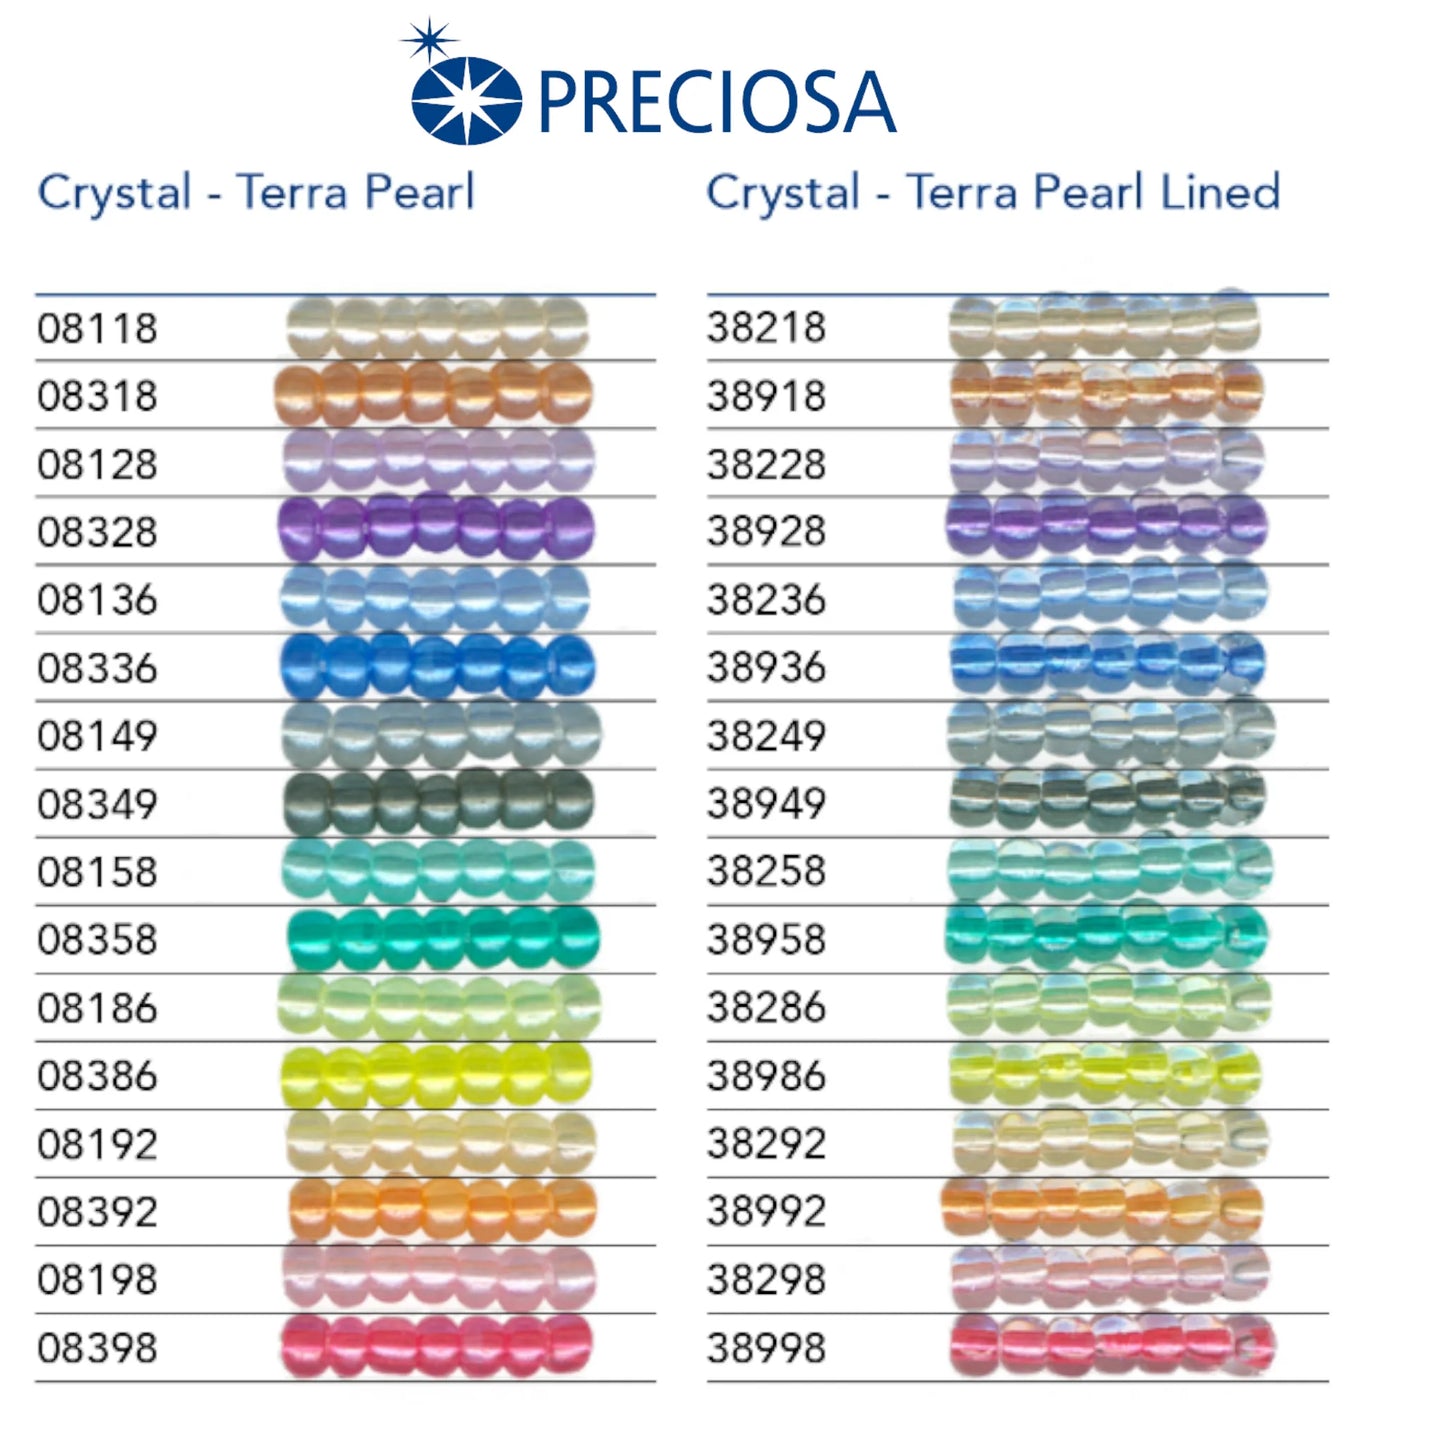 08358 Rocailles tchèques PRECIOSA Rocailles 10/0 turquoise. Cristal - Terra Perle.